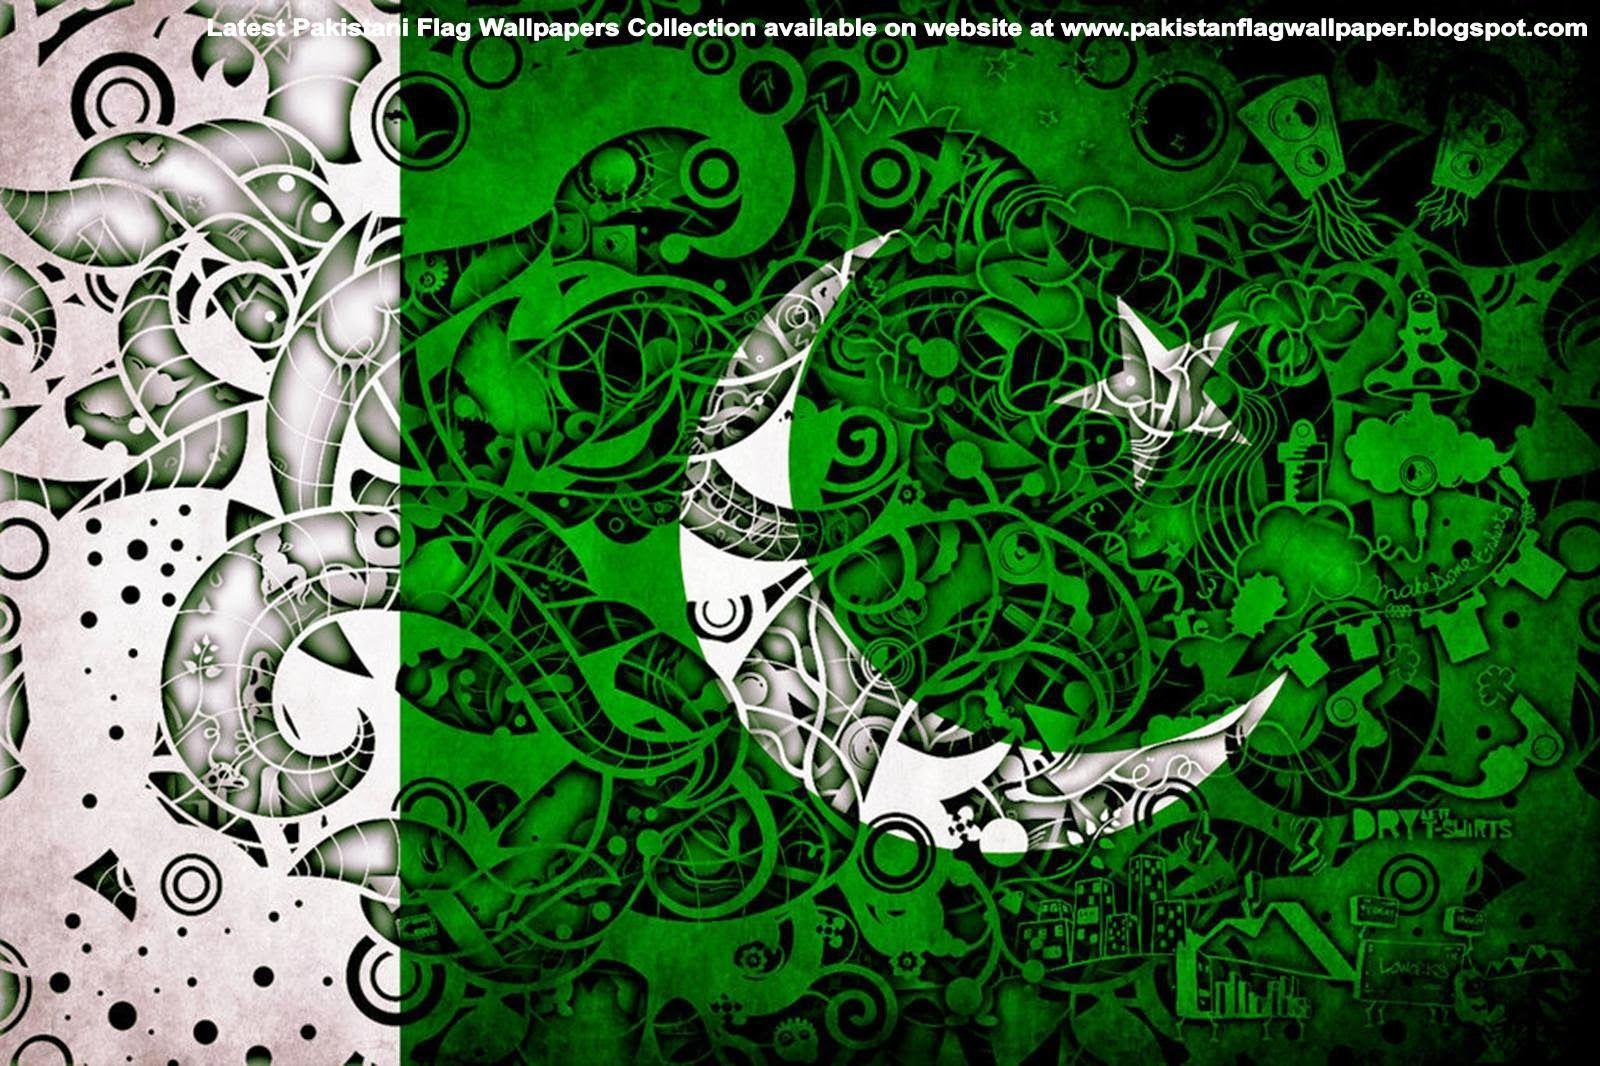 Pakistan Flag Wallpaper: 2014